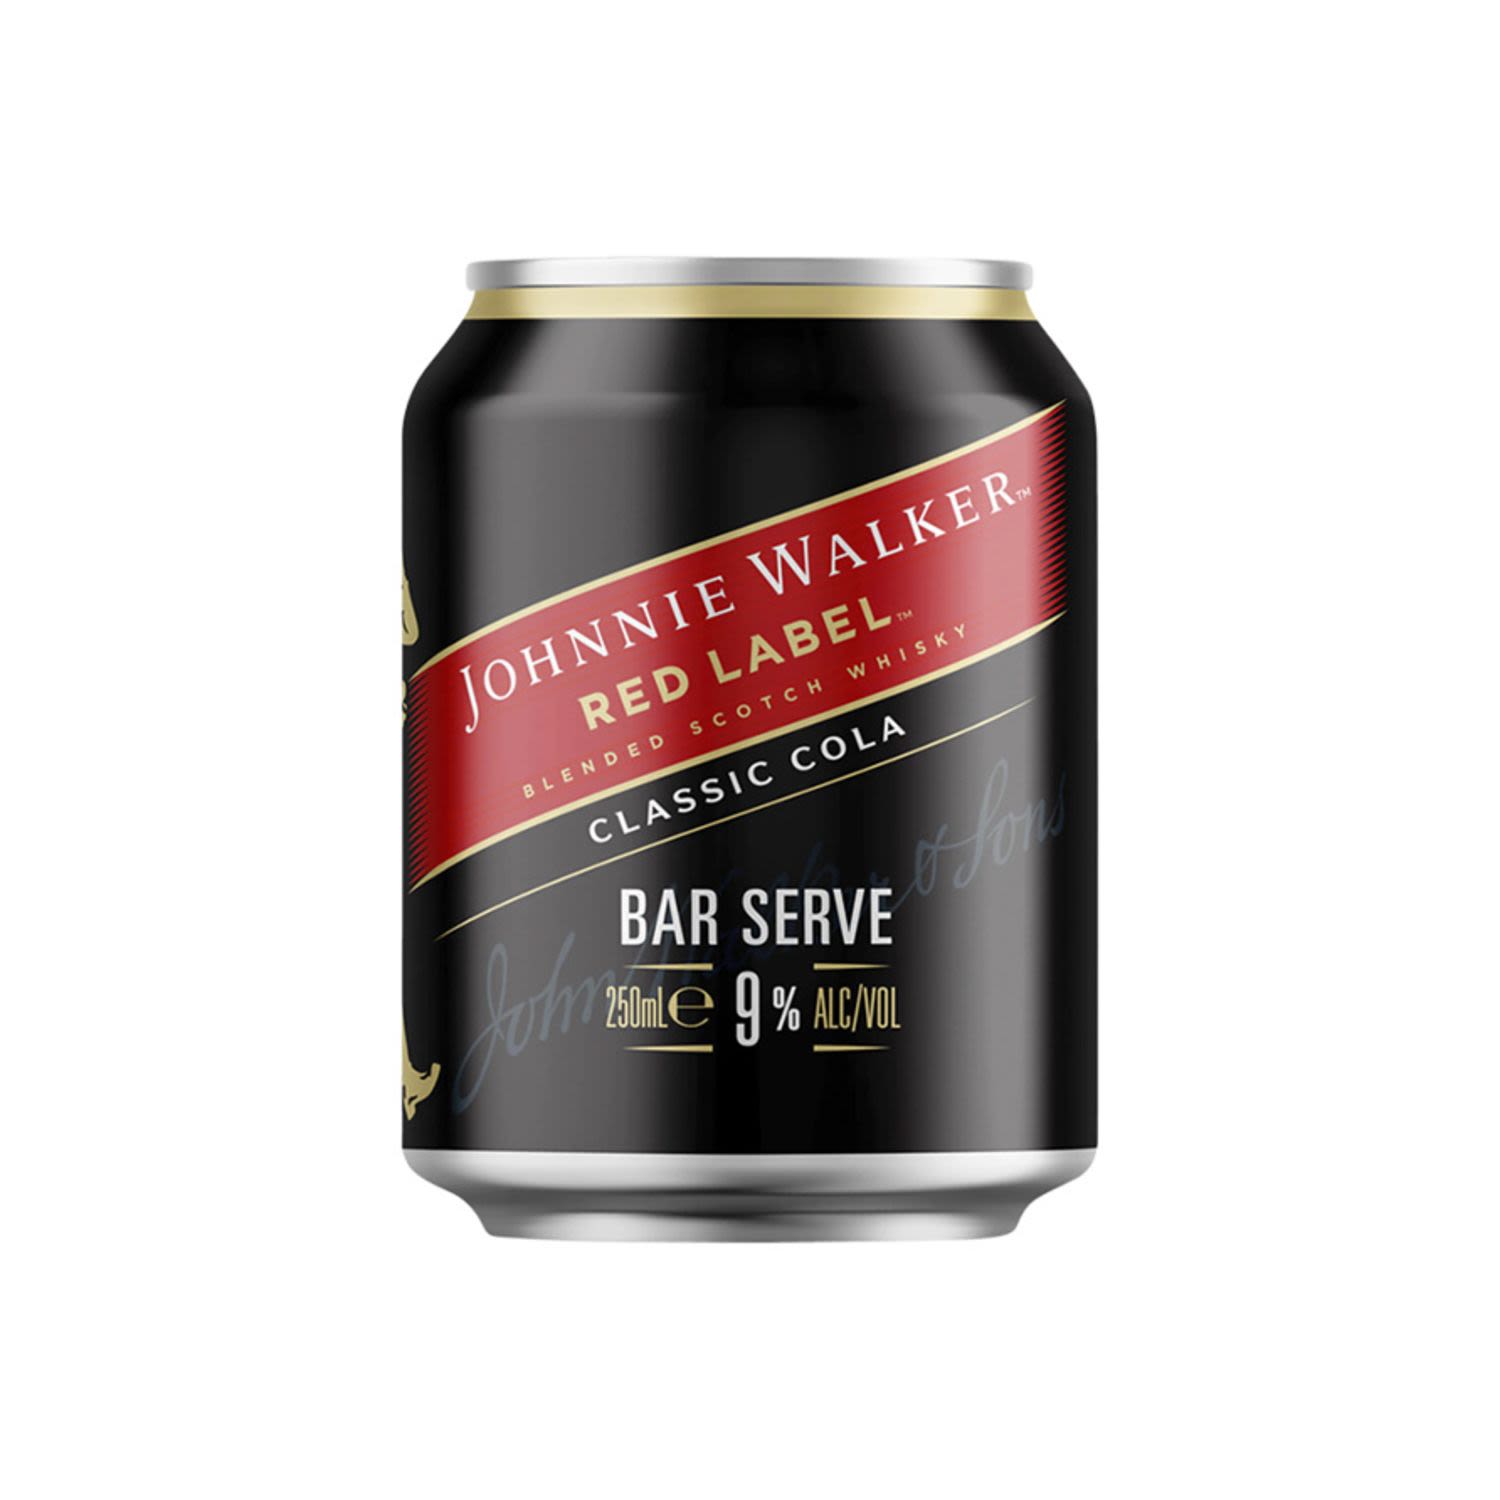 Johnnie Walker & Cola Bar Serve 9% Can 250mL 4 Pack